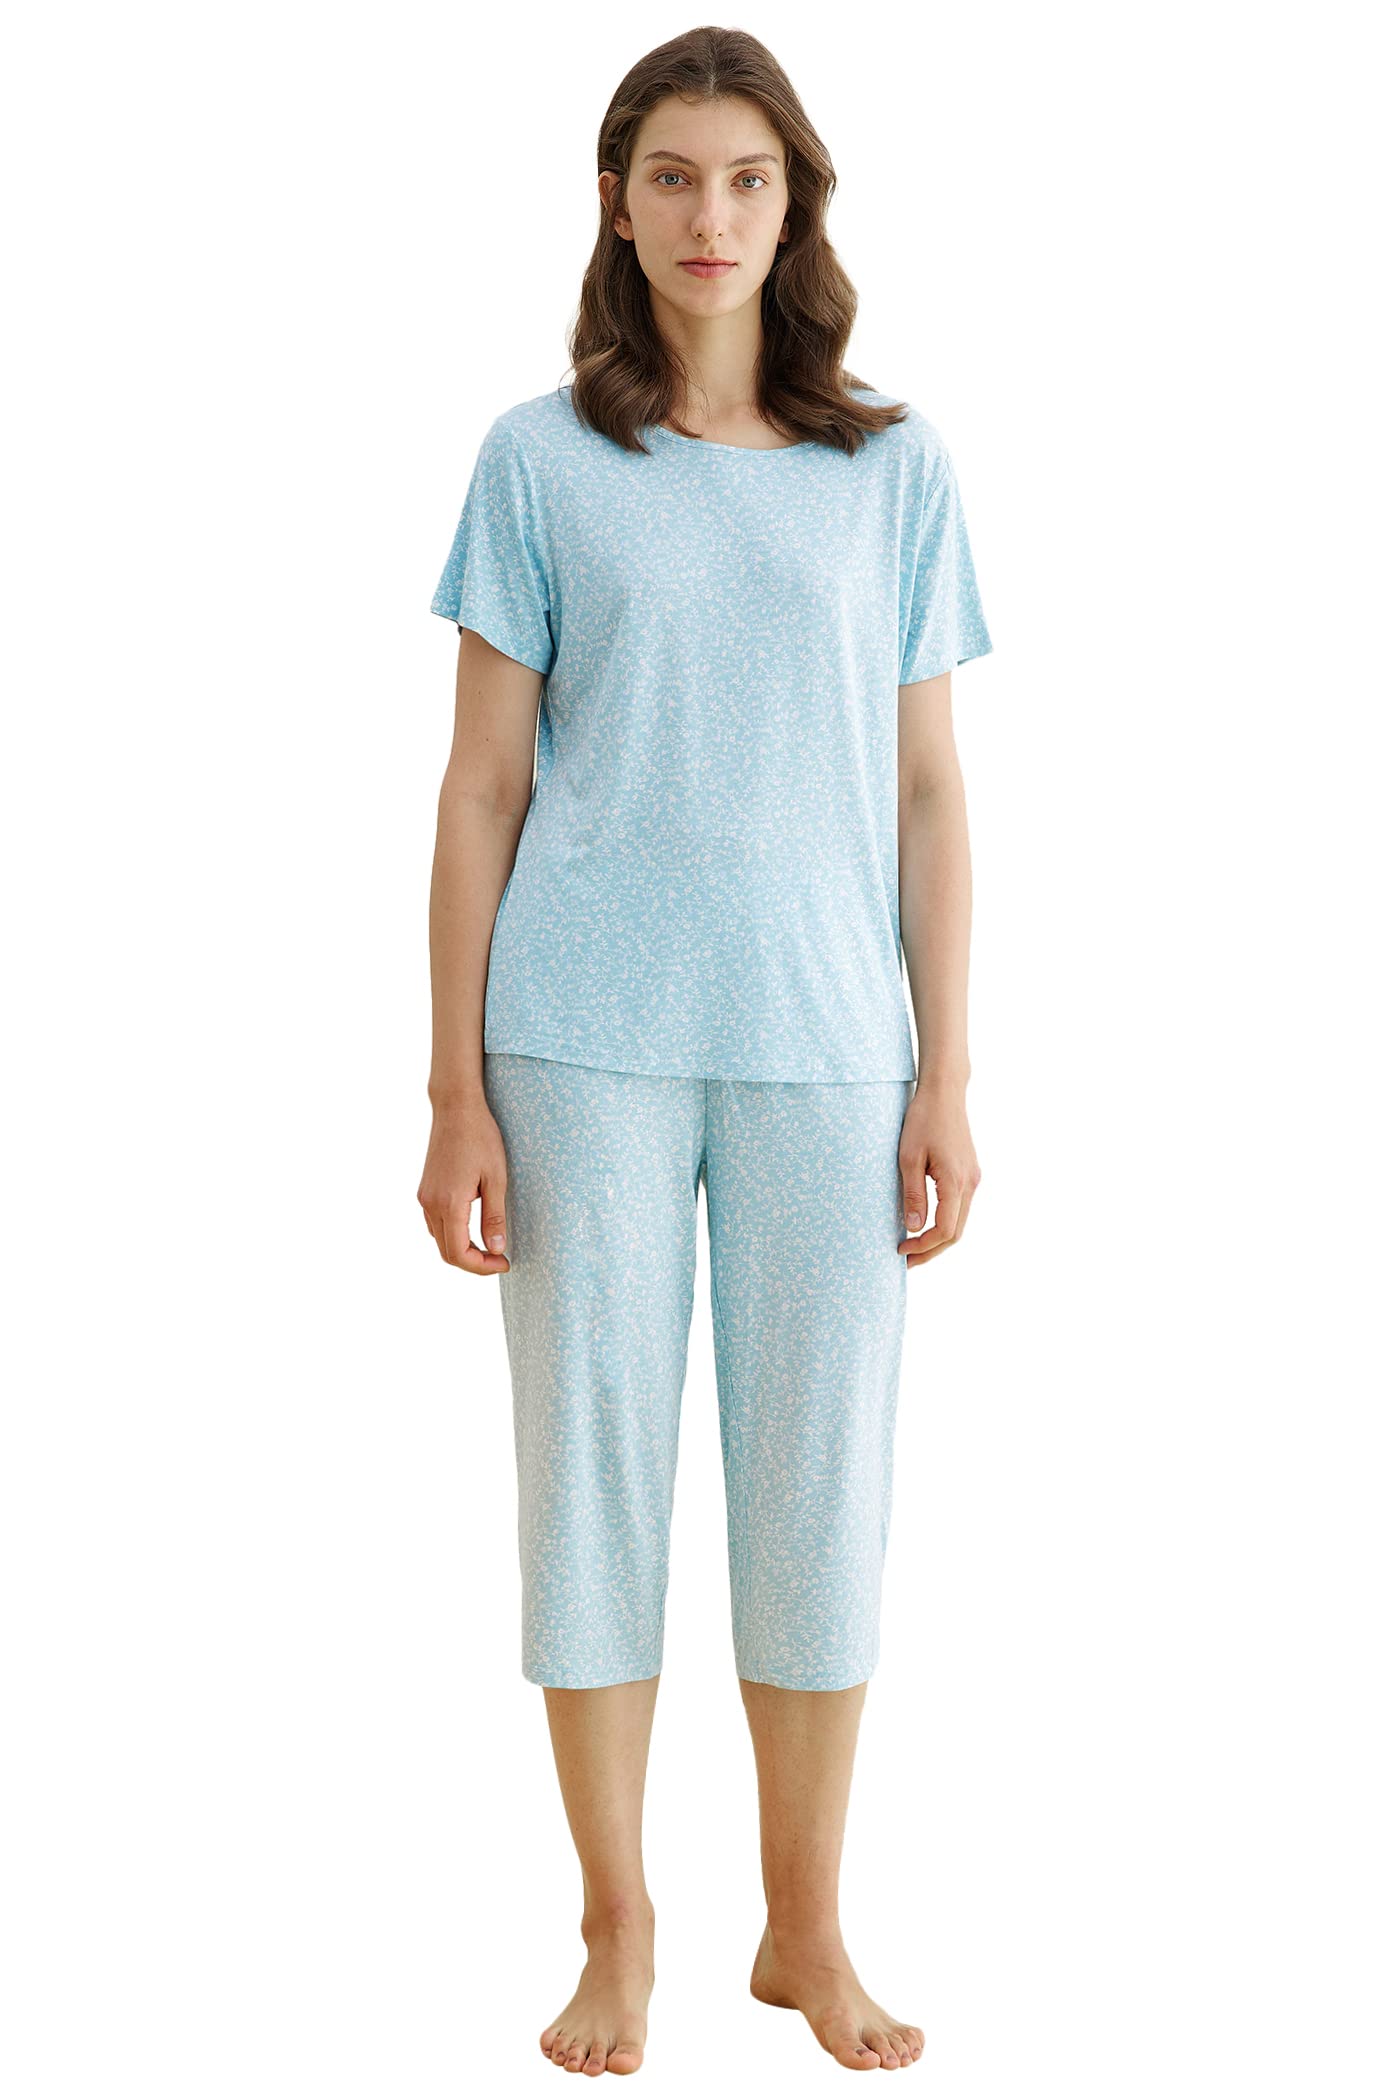 CLZOUD Women Satin Pajamas Set Short Sleeve Capri Sleepwear Button